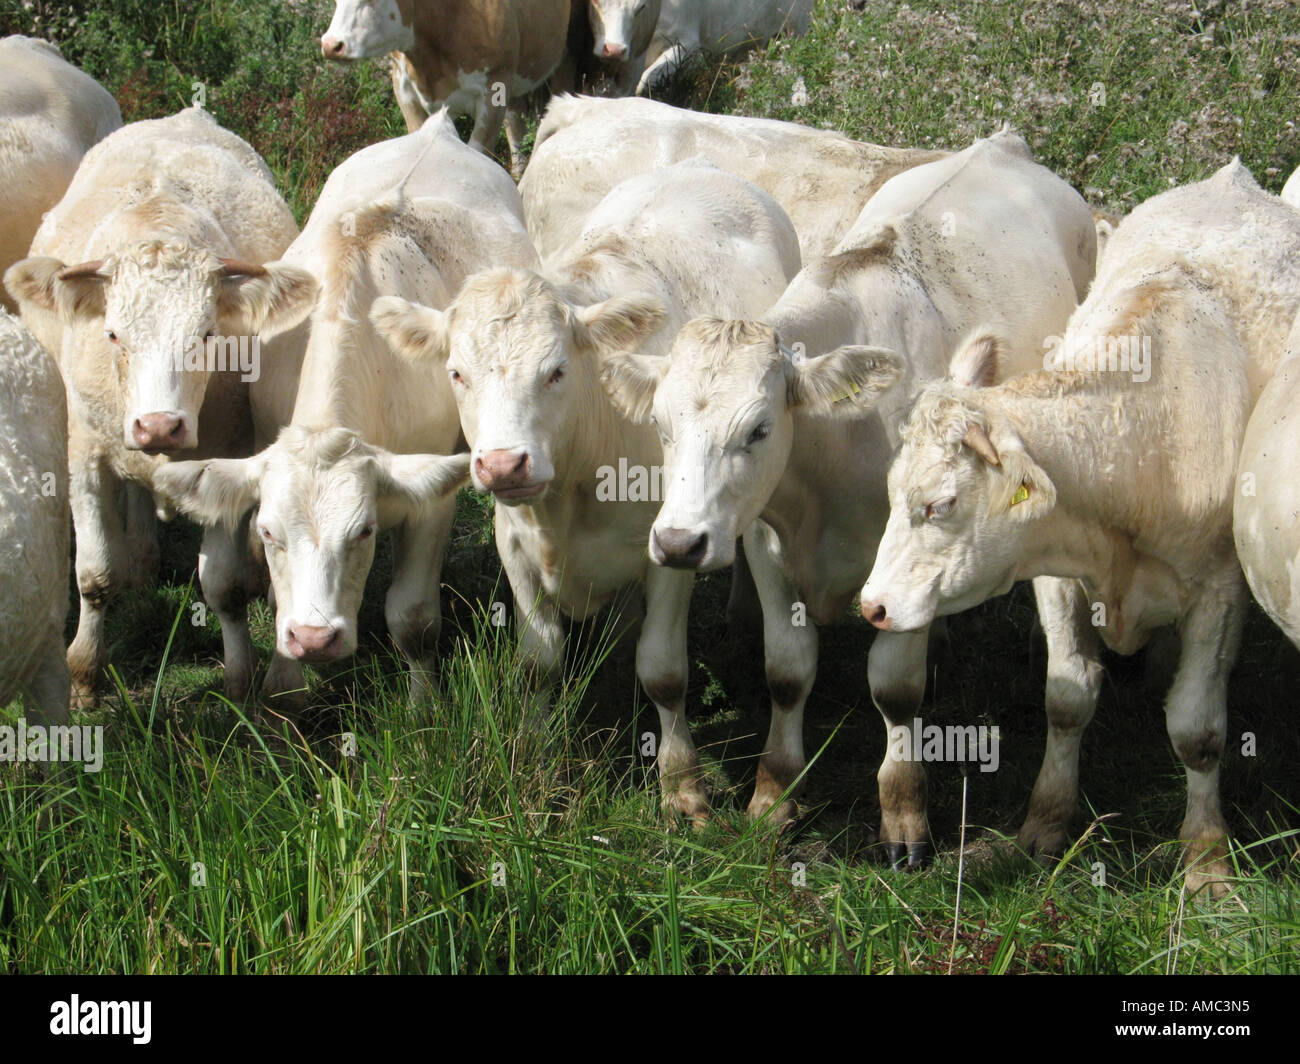 Charolais or charolais cross cattle lined up, Norfolk Broads, England, UK. Stock Photo